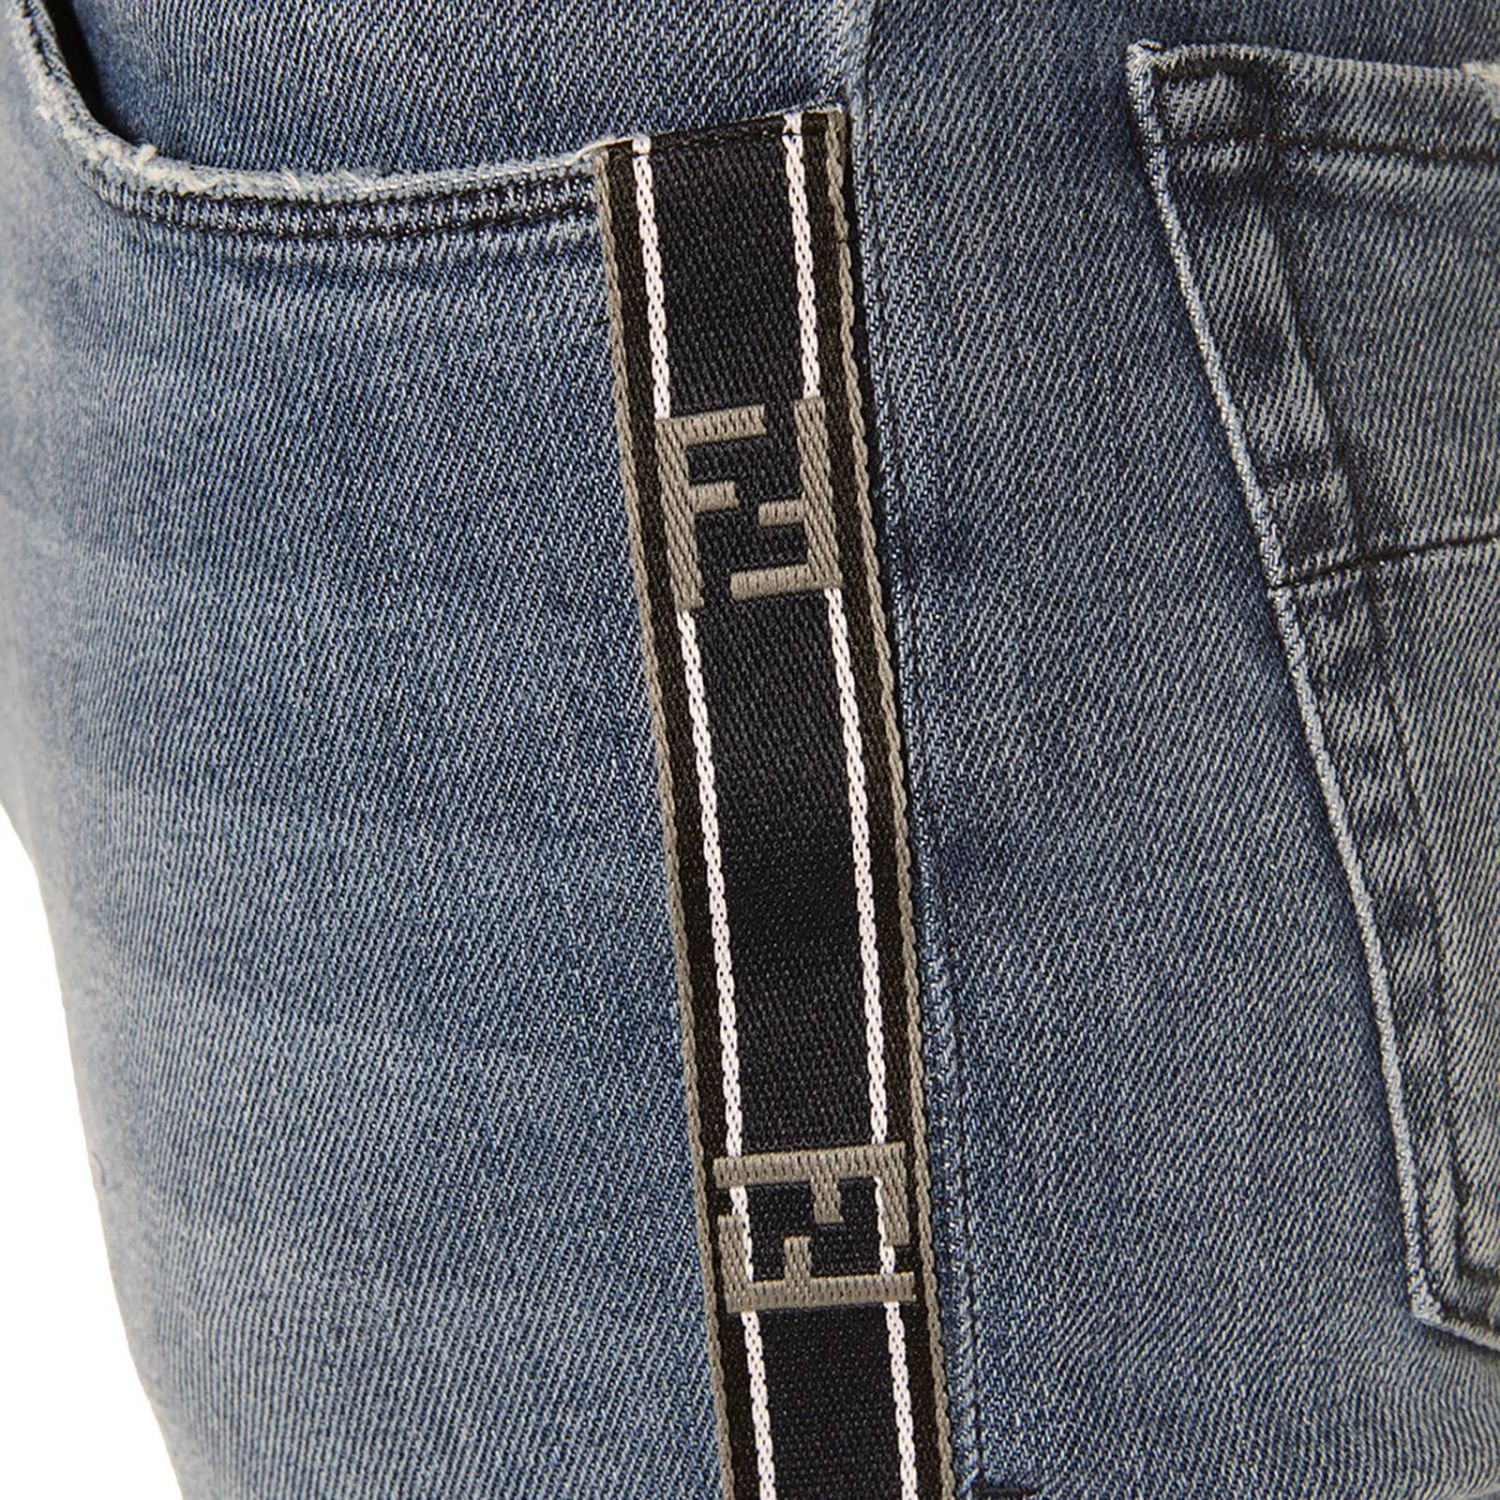 Fendi Outlet: Jeans men | Jeans Fendi Men Denim | Jeans FLP201 GIGLIO.COM